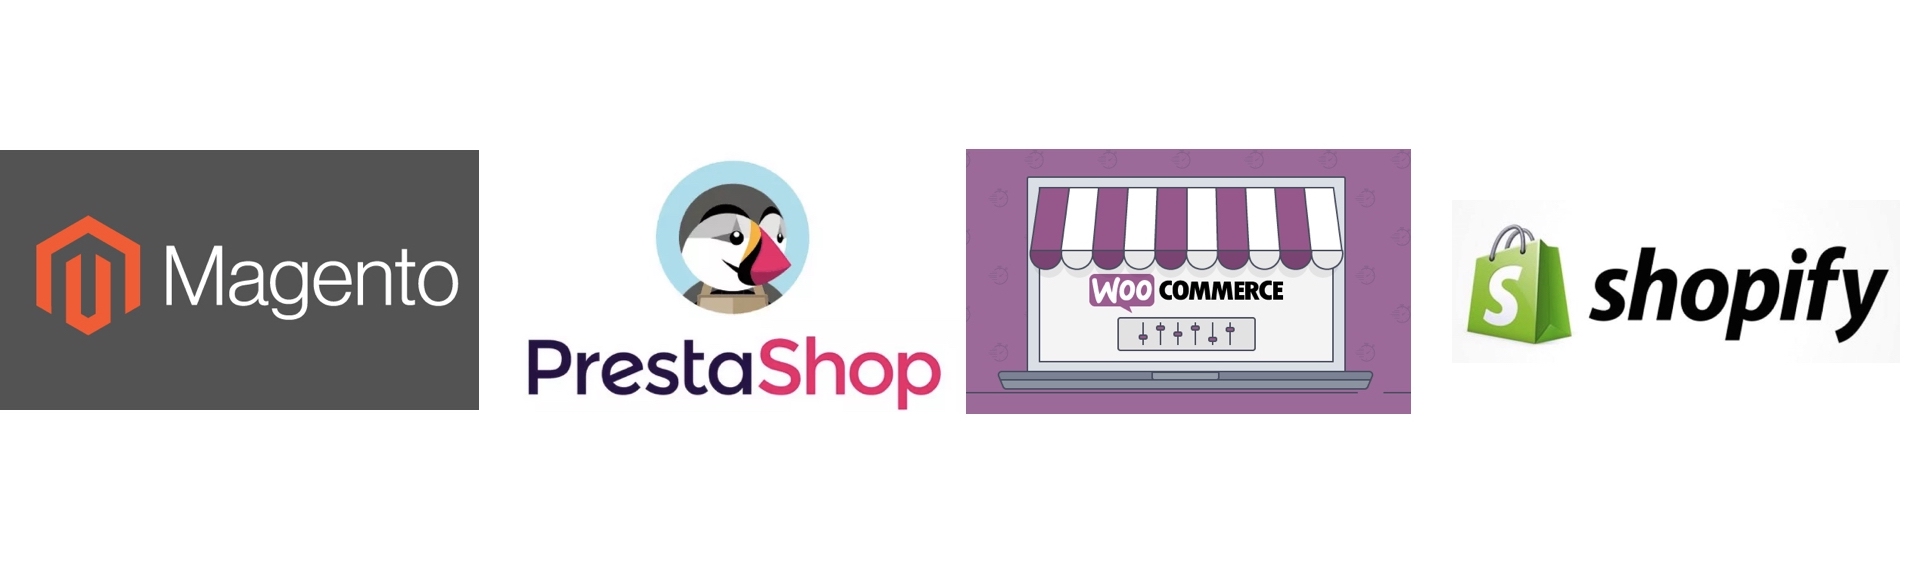 Shopify vs WooCommerce vs Prestashop vs Magento